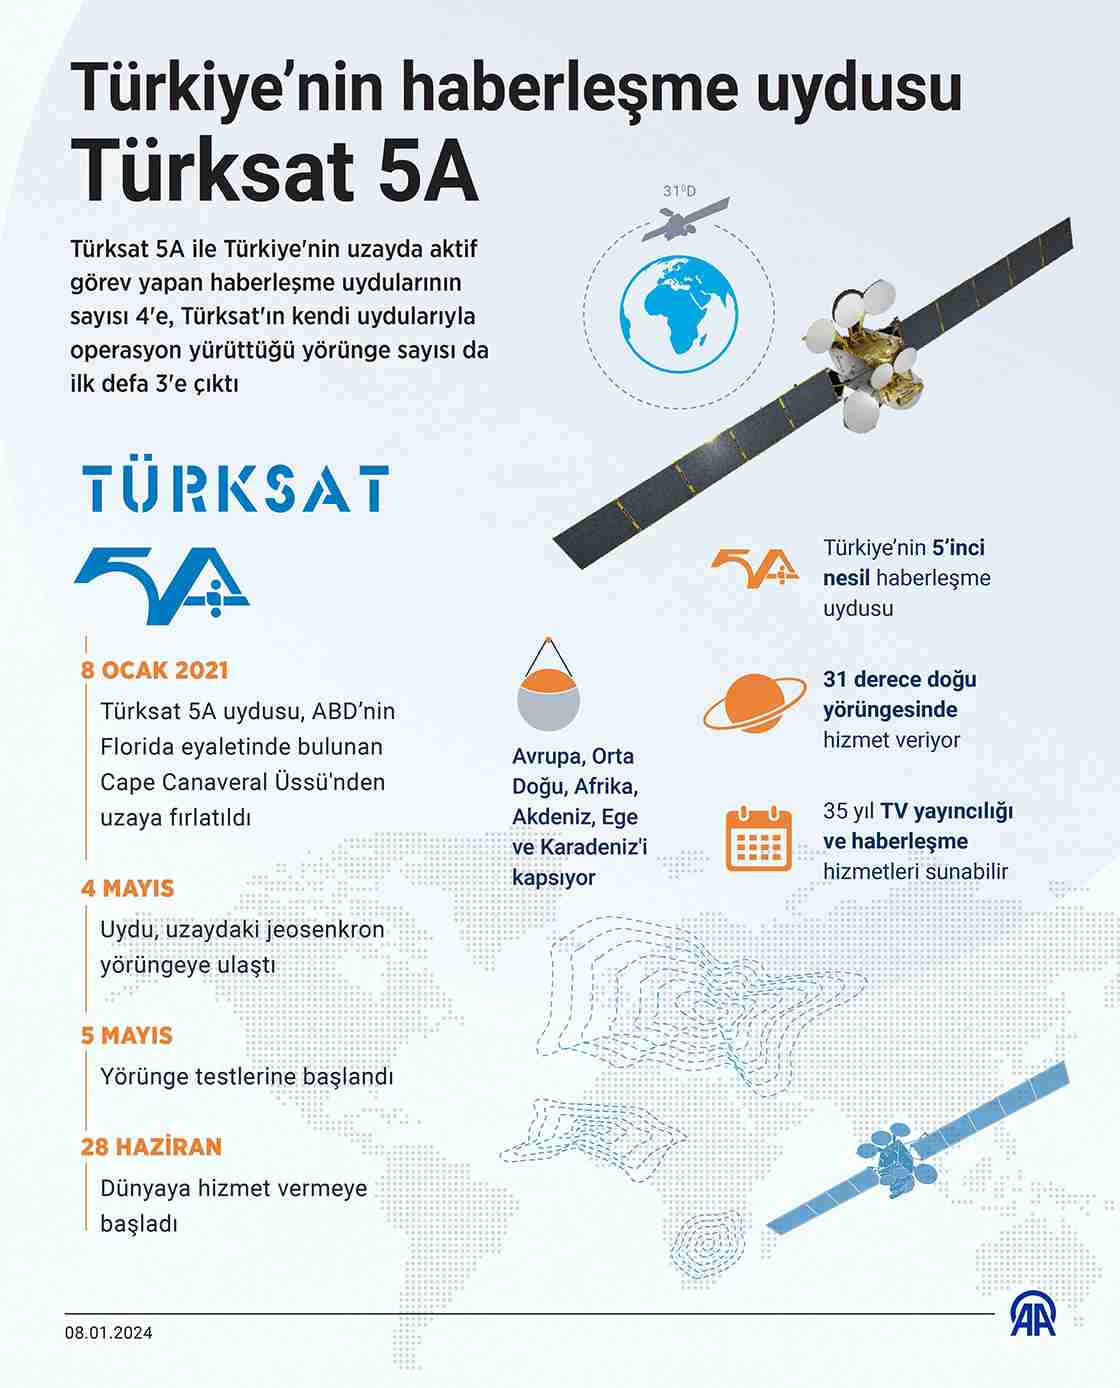 Türksat 5A uzayda 3 senesini doldurdu